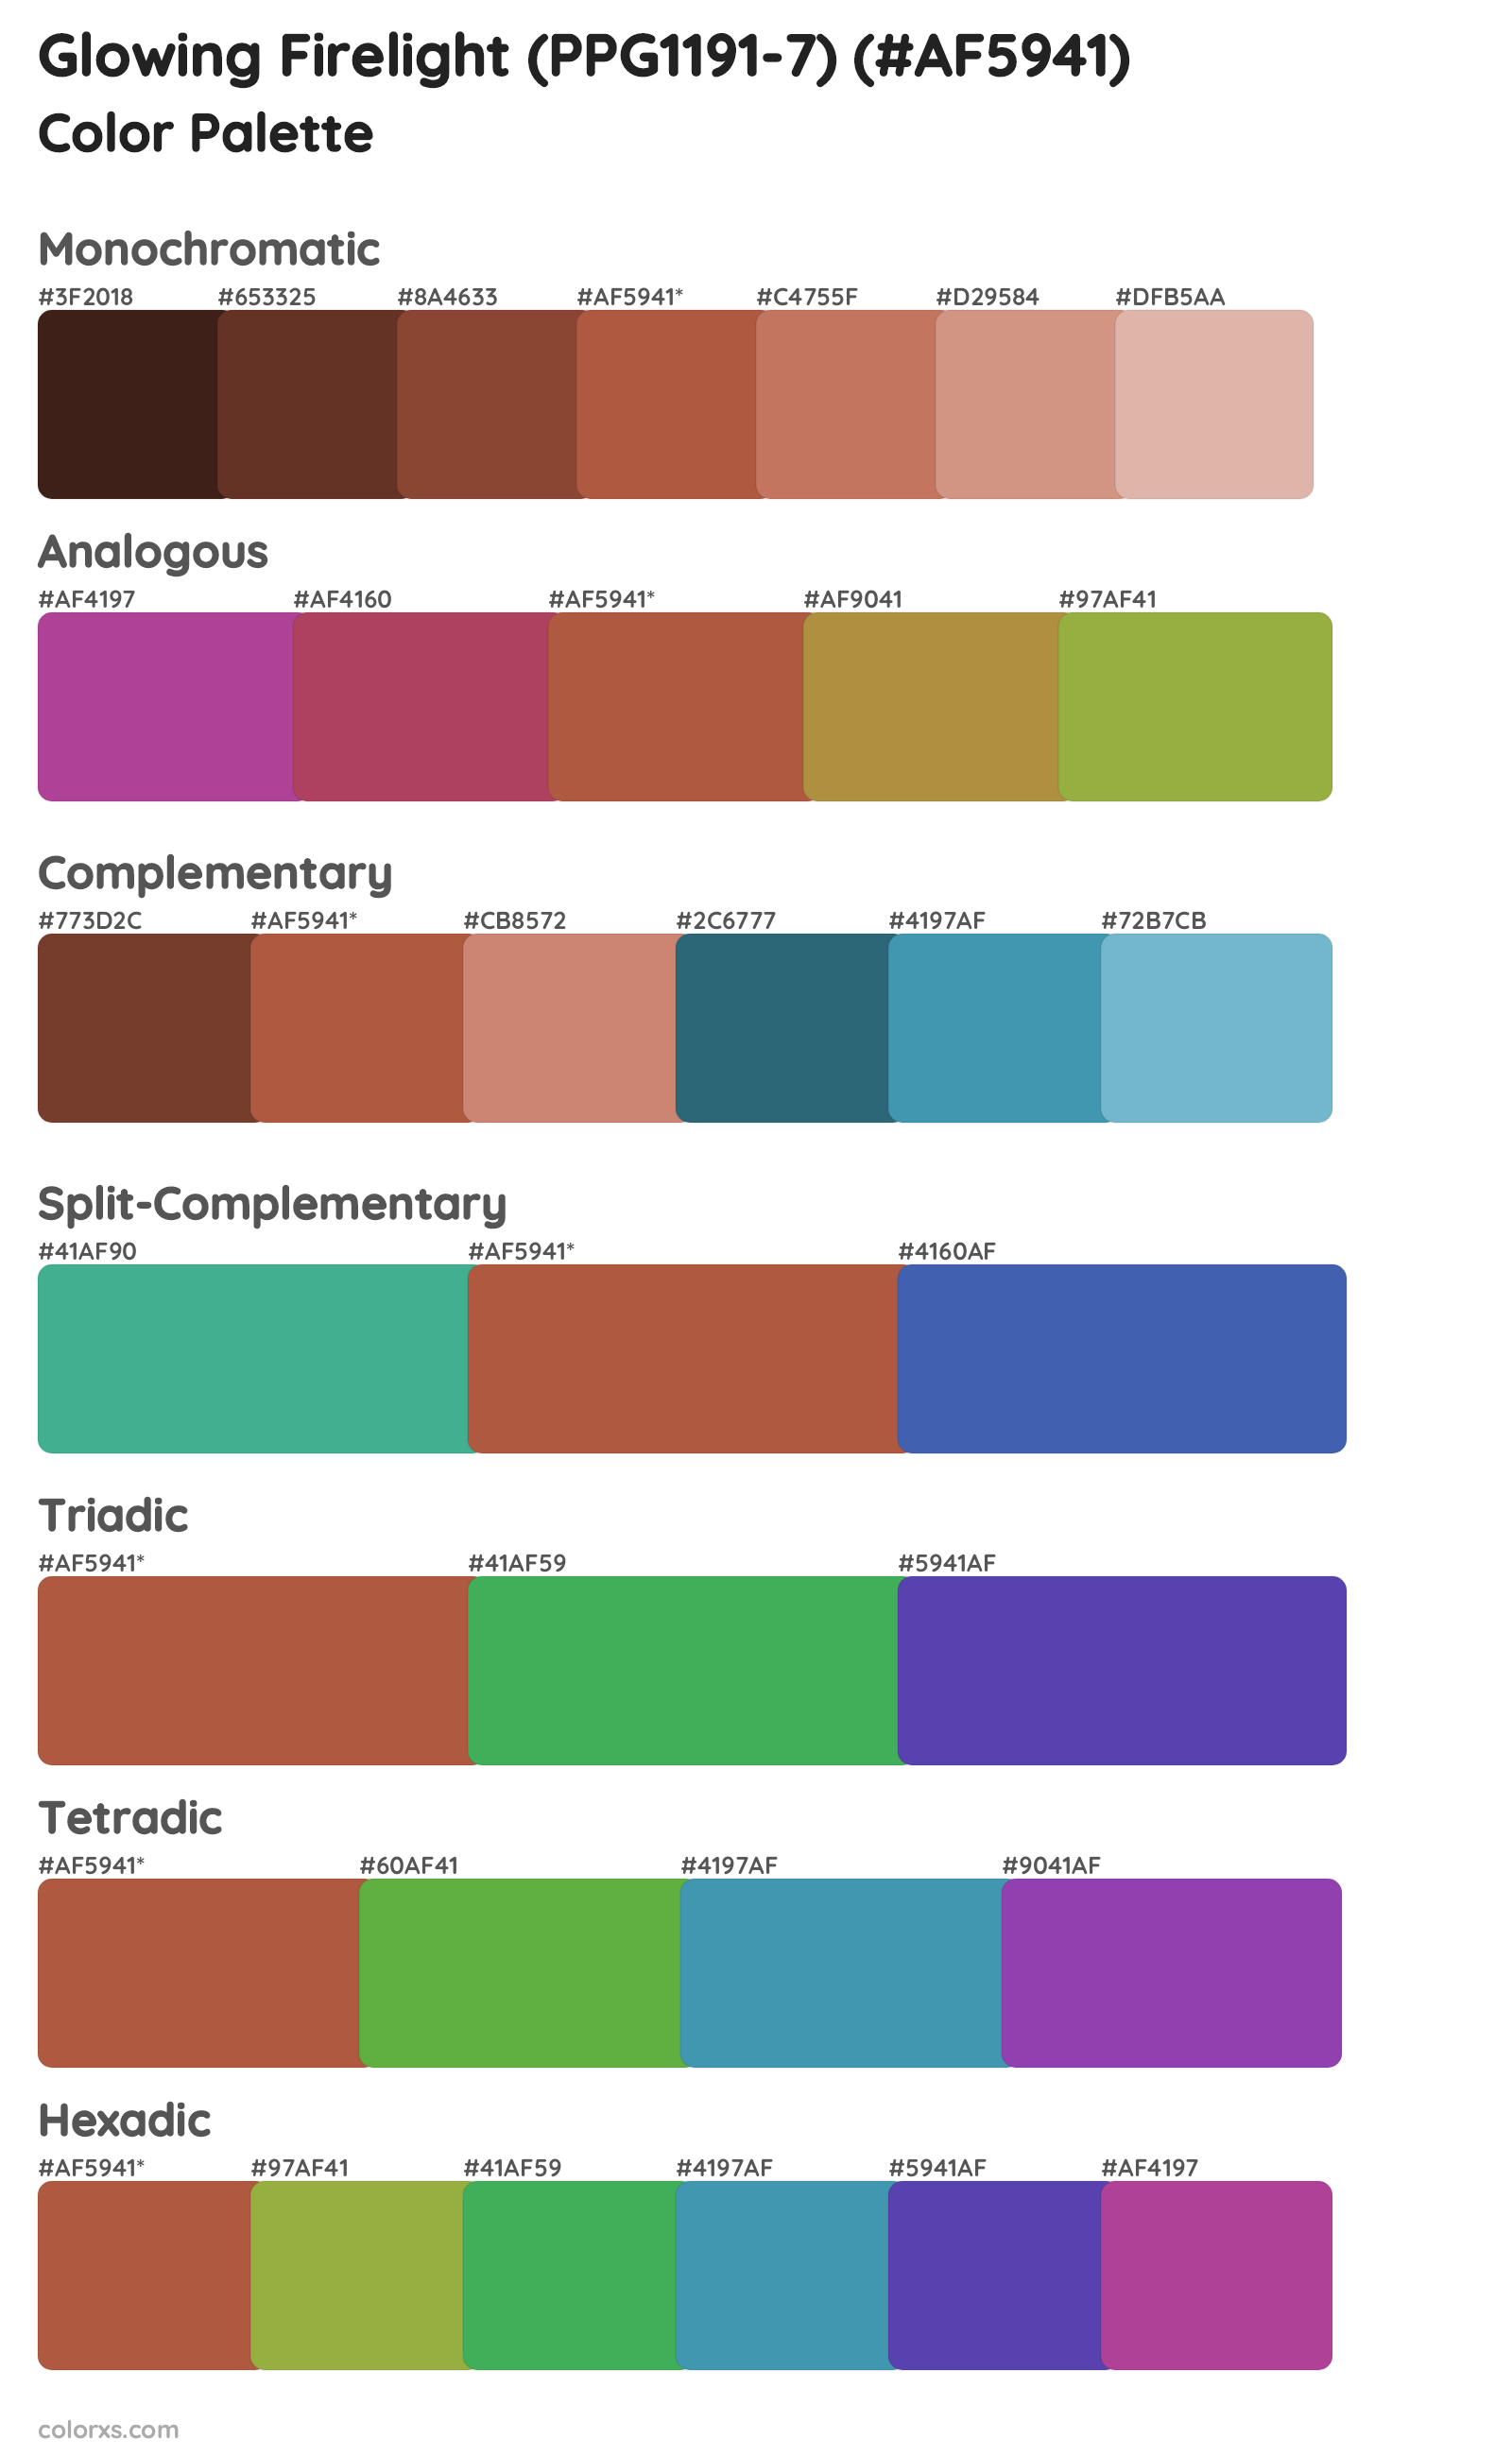 Glowing Firelight (PPG1191-7) Color Scheme Palettes